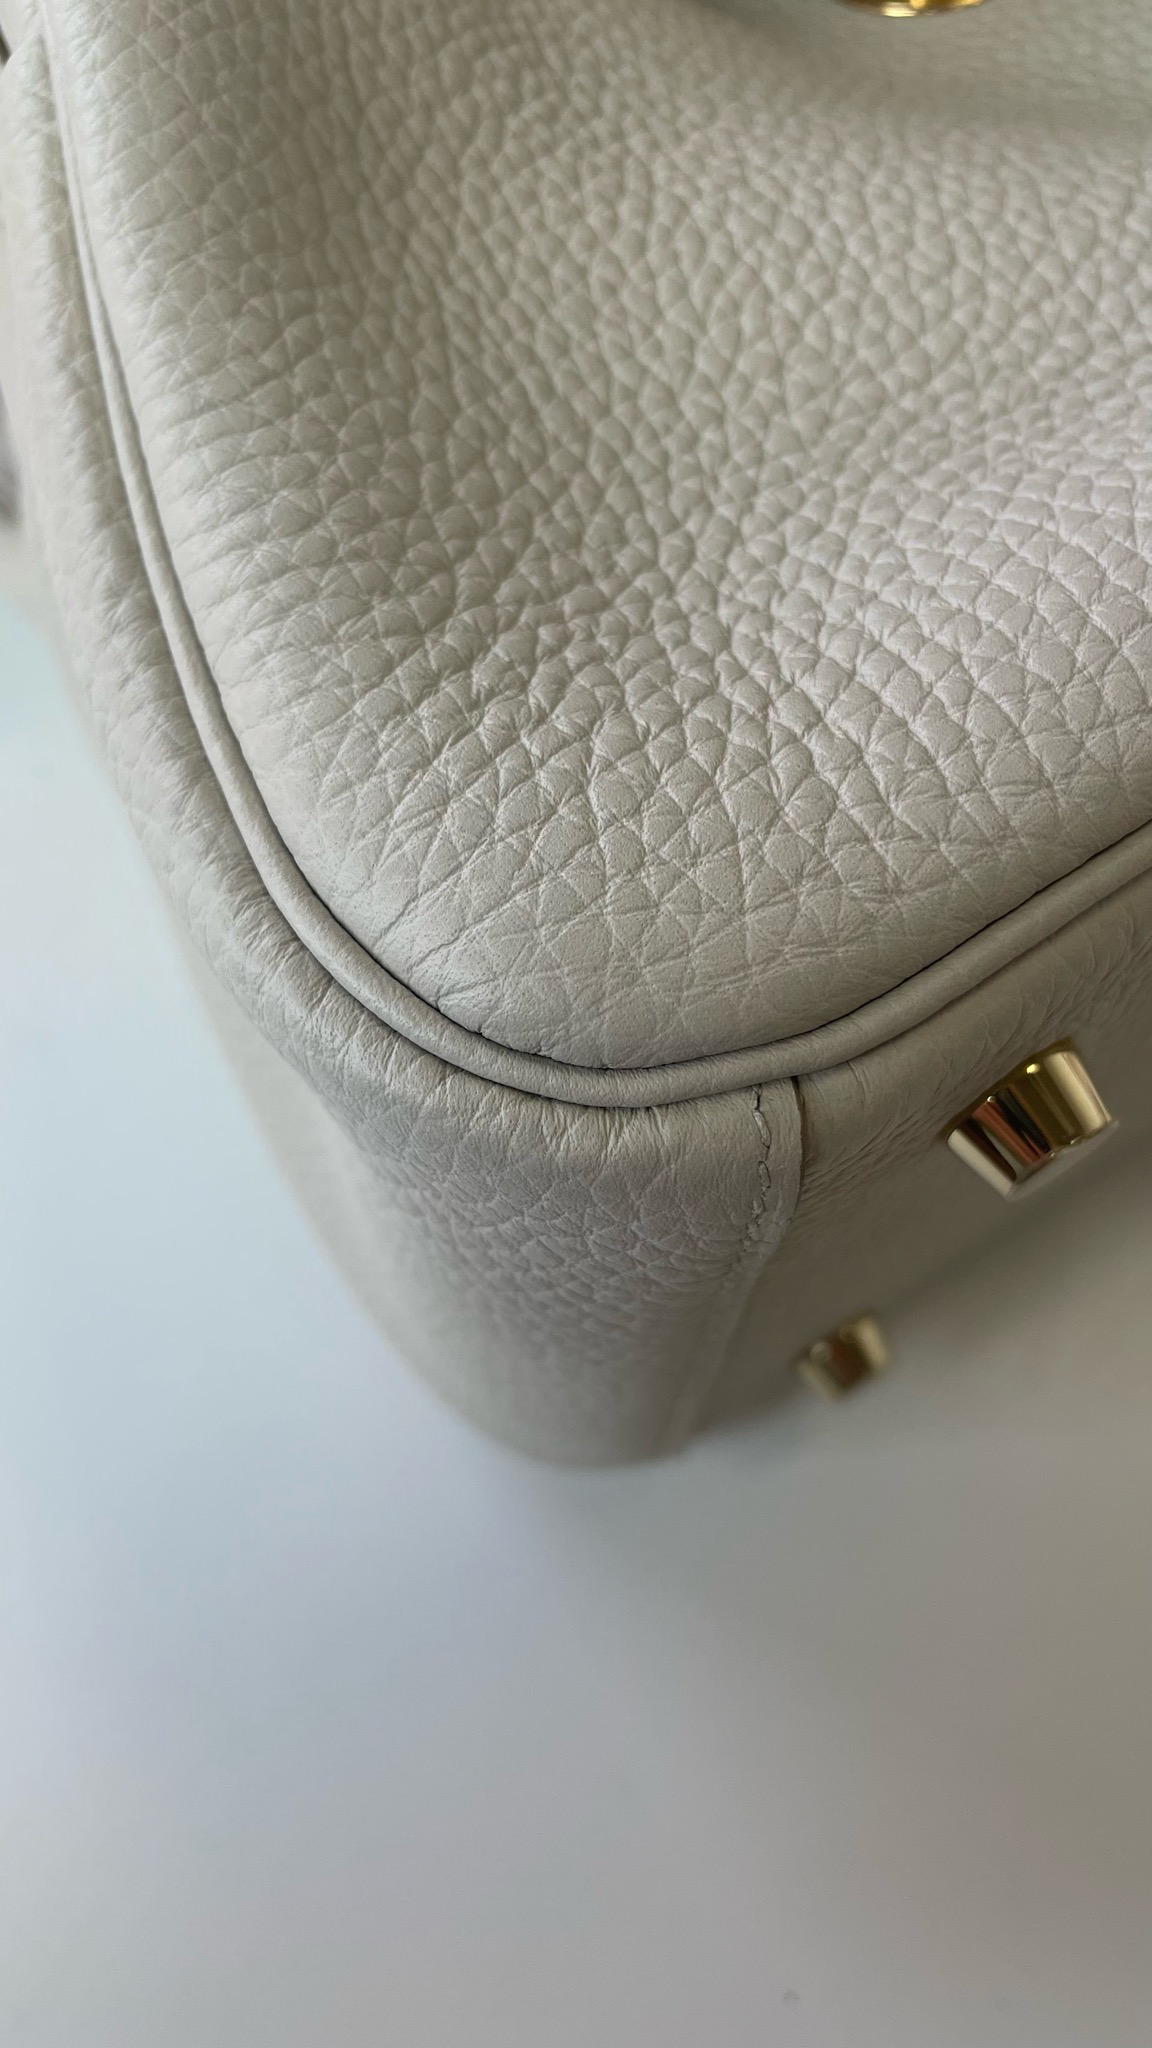 Hermès Lindy Handbag - Buy or Sell your Designer Handbags